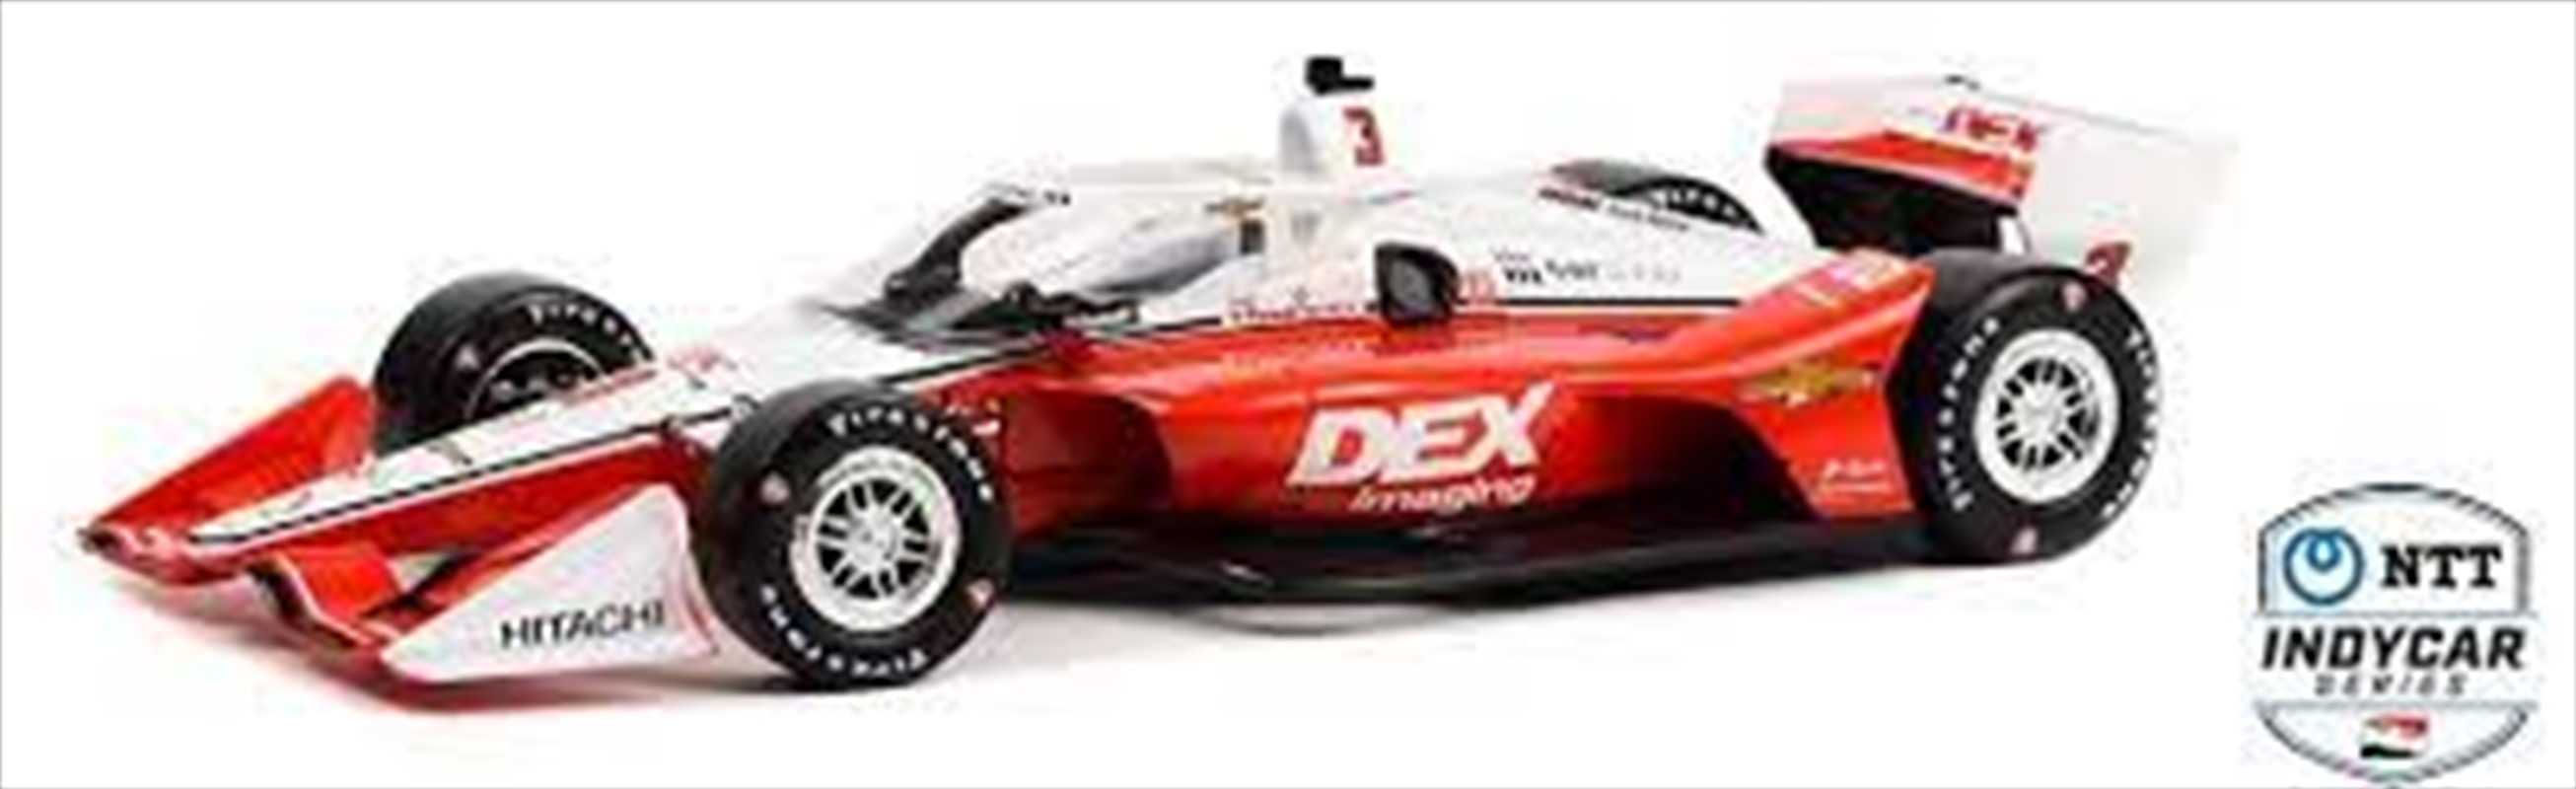 1:18 2021 NTT Indycar Series #3 Scott McLaughlin/Team Penske DEX Imaging (Road Course Configuration)/Product Detail/Figurines